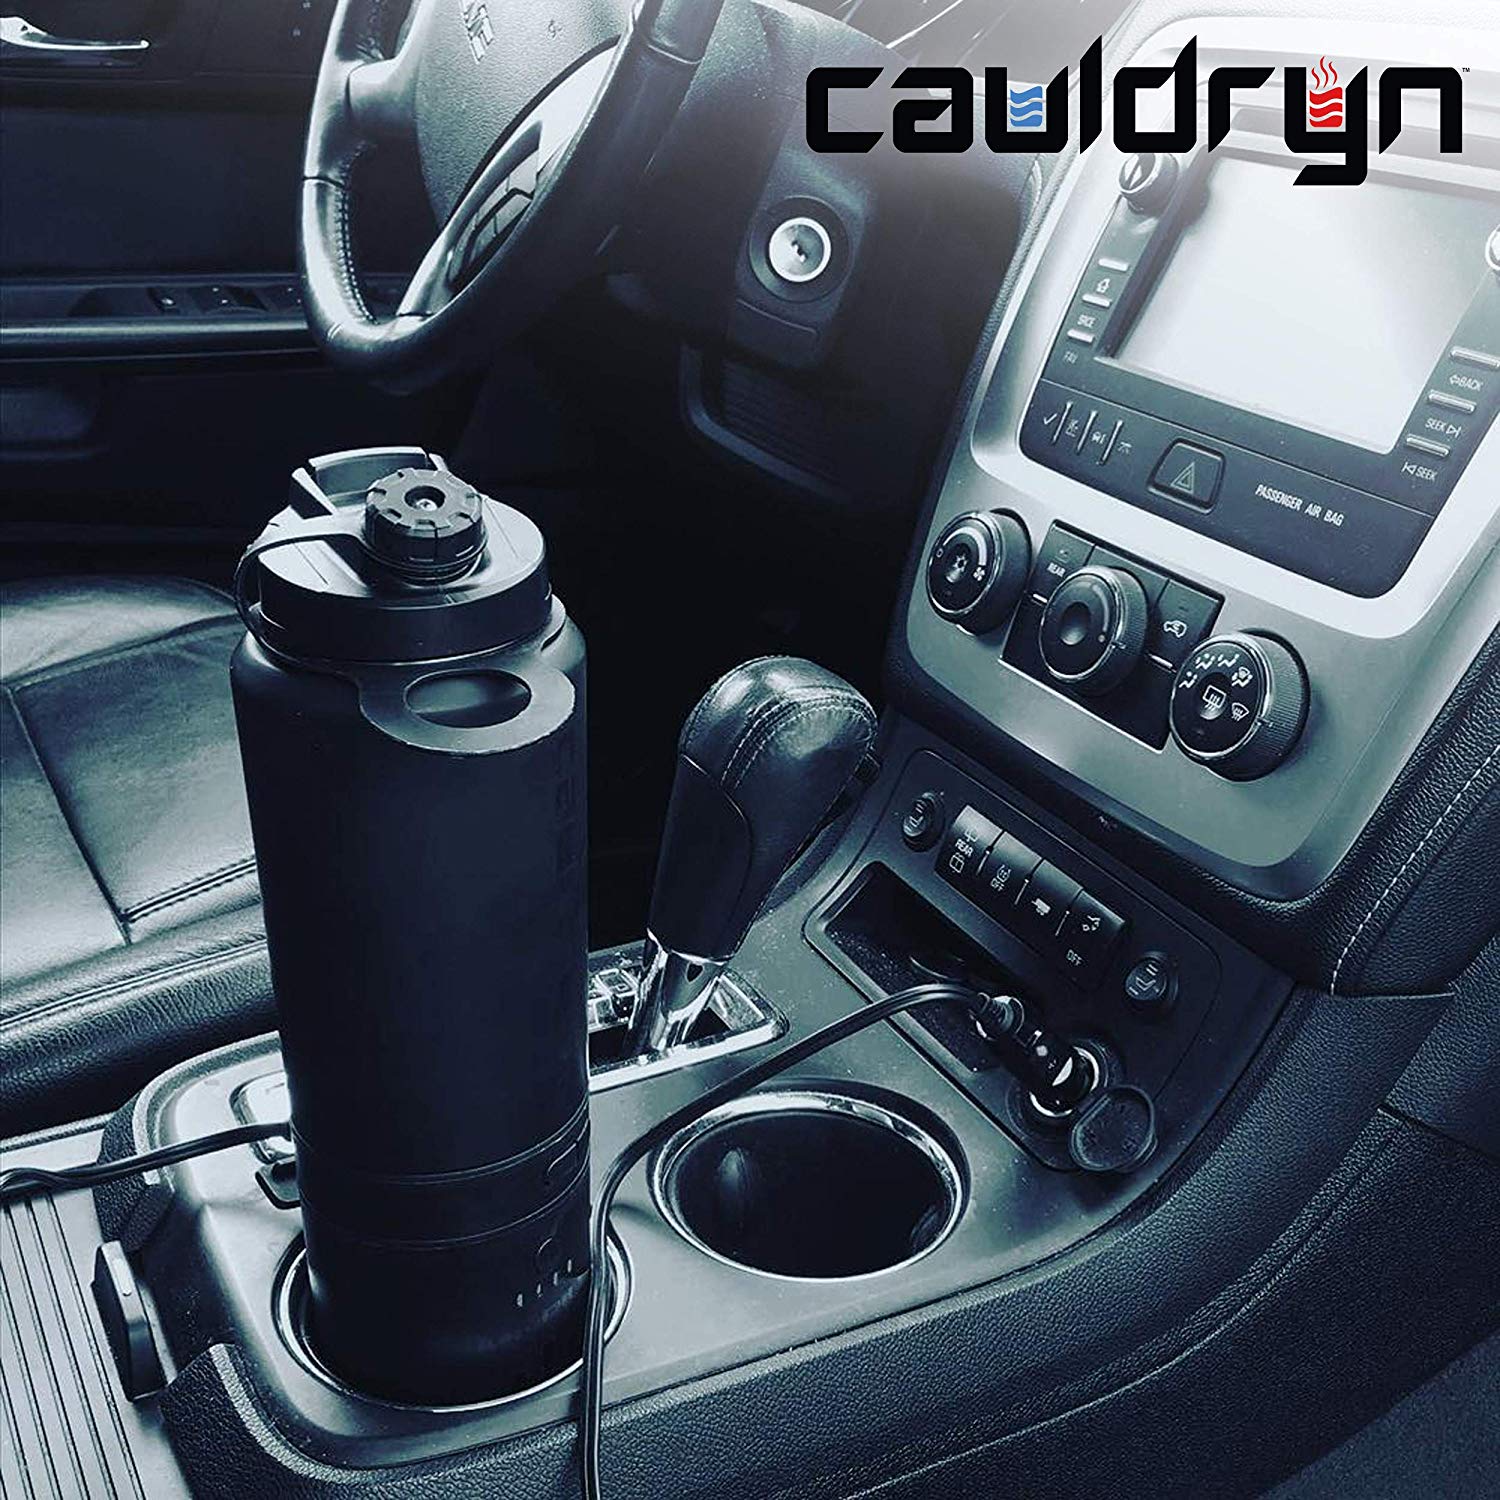 Cauldryn Vehicle DC Adapter Base for use with Cauldryn Smart Mug